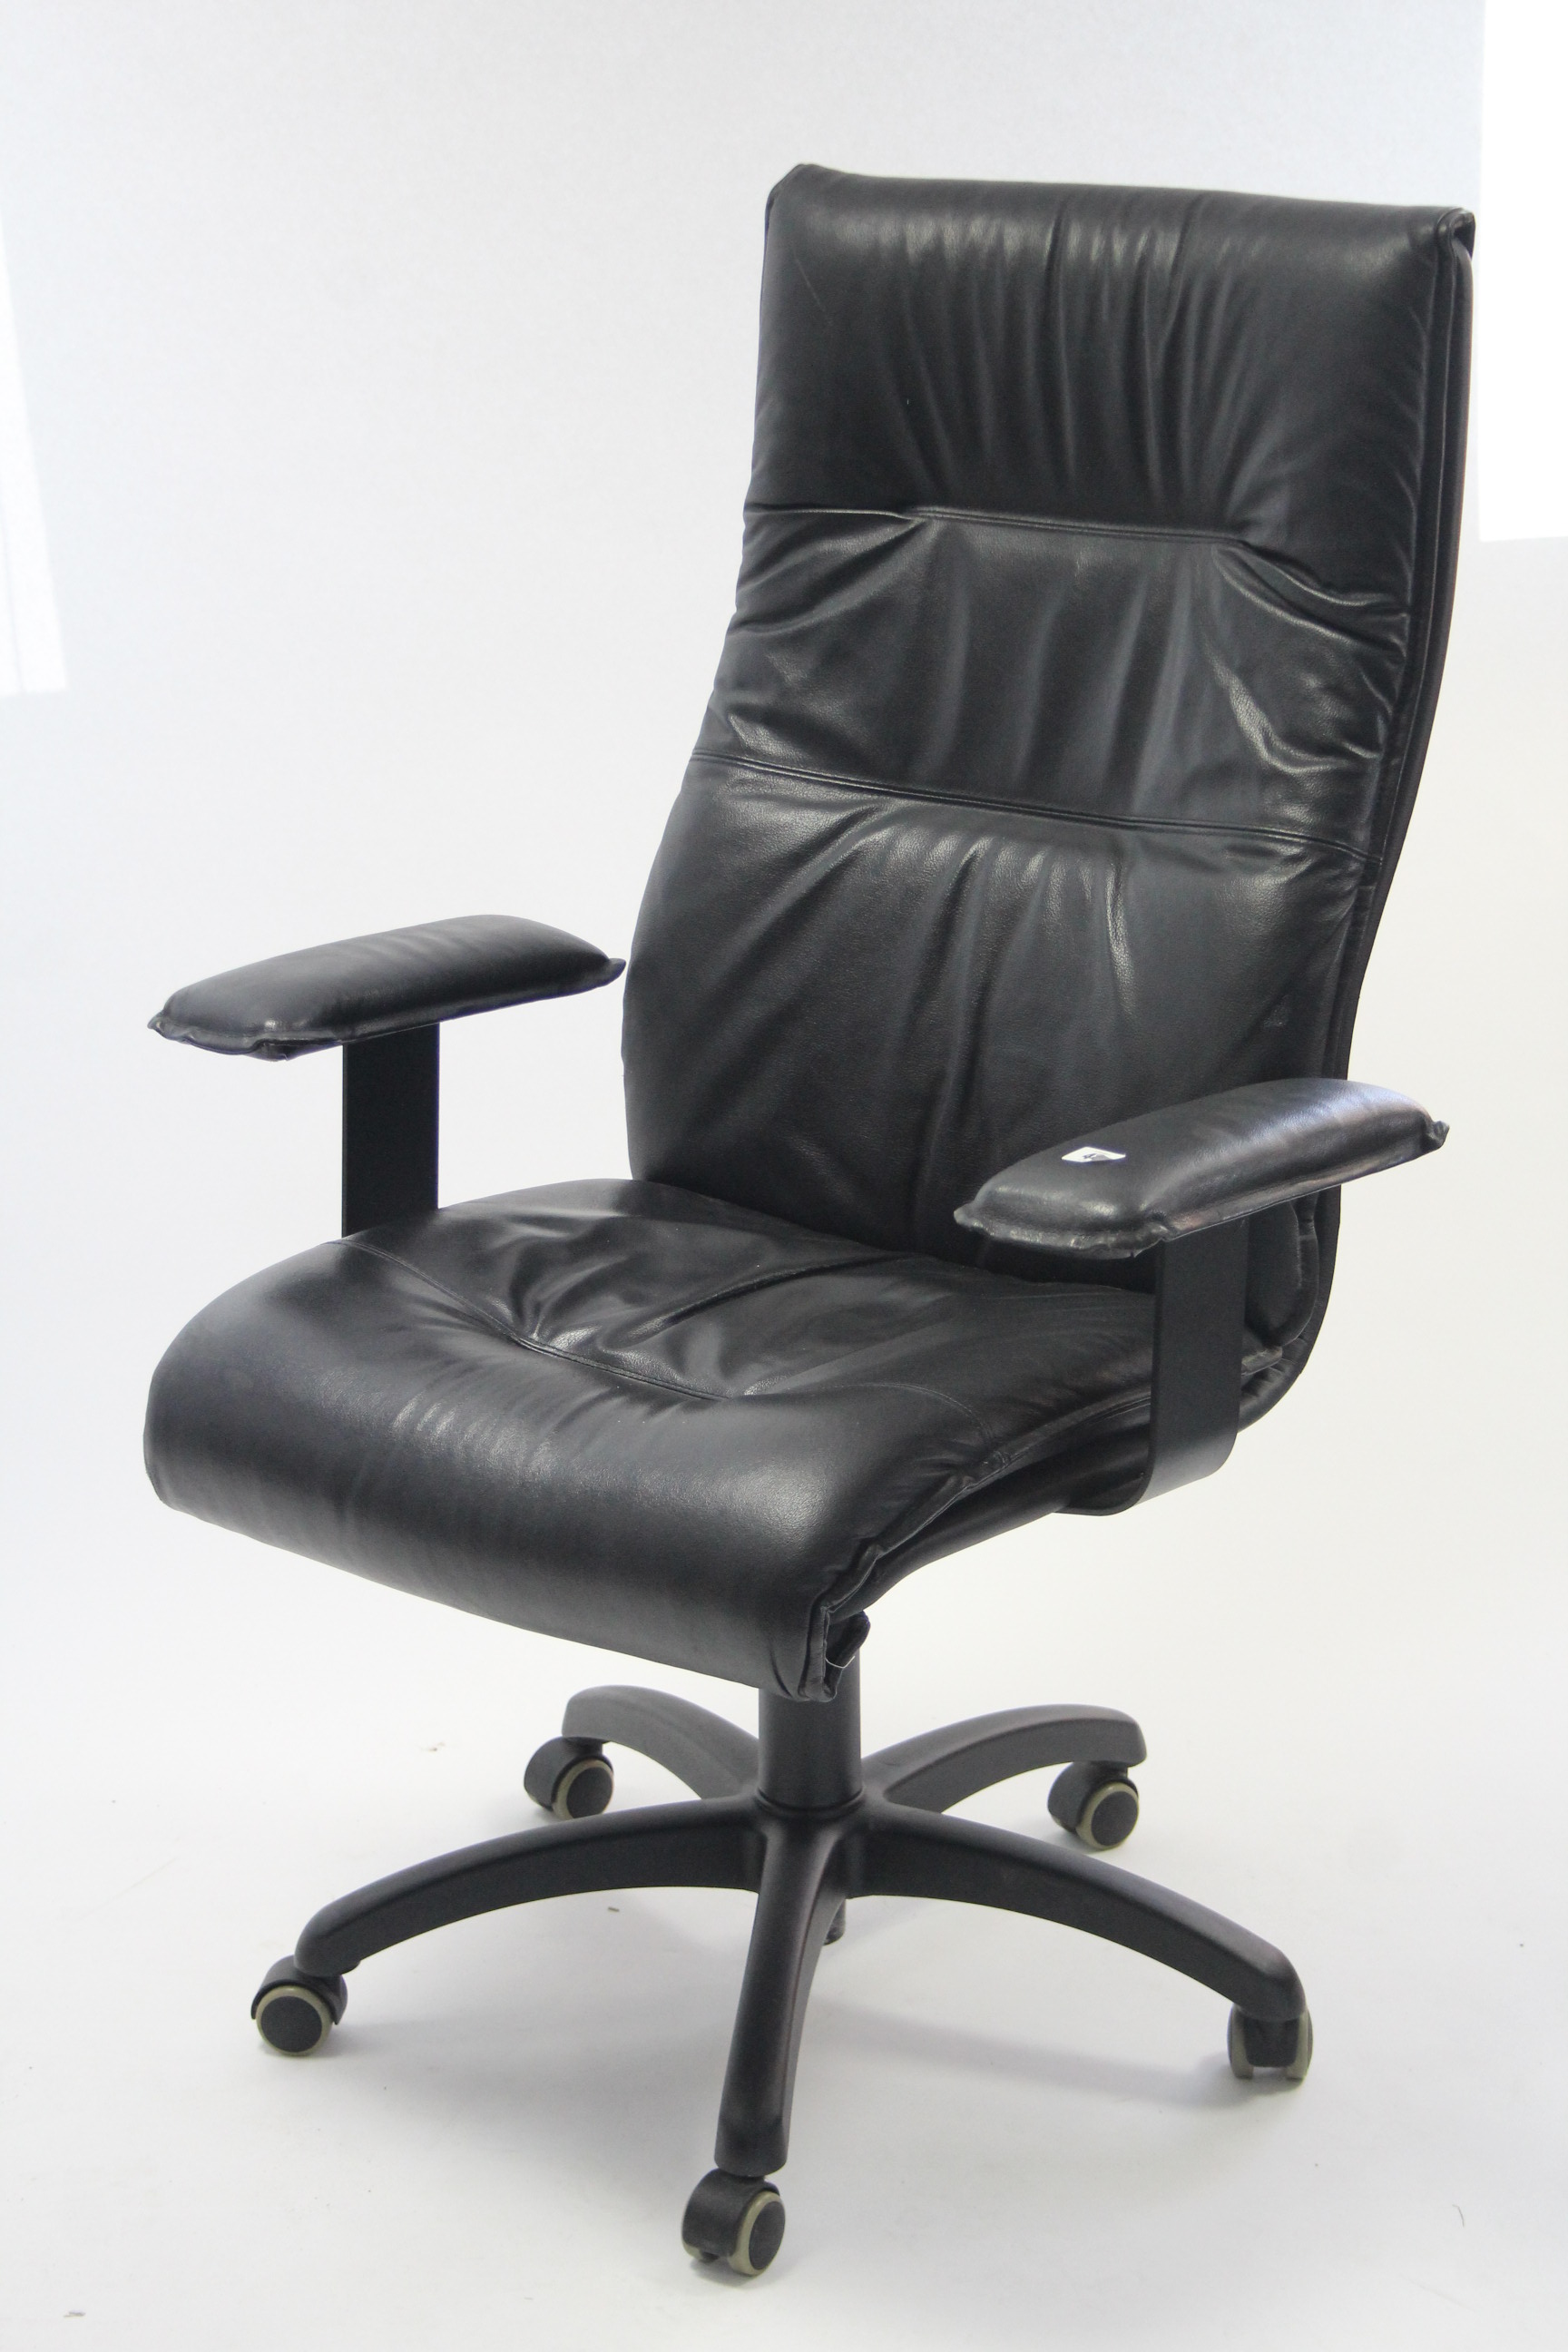 A black vinyl swivel office chair.